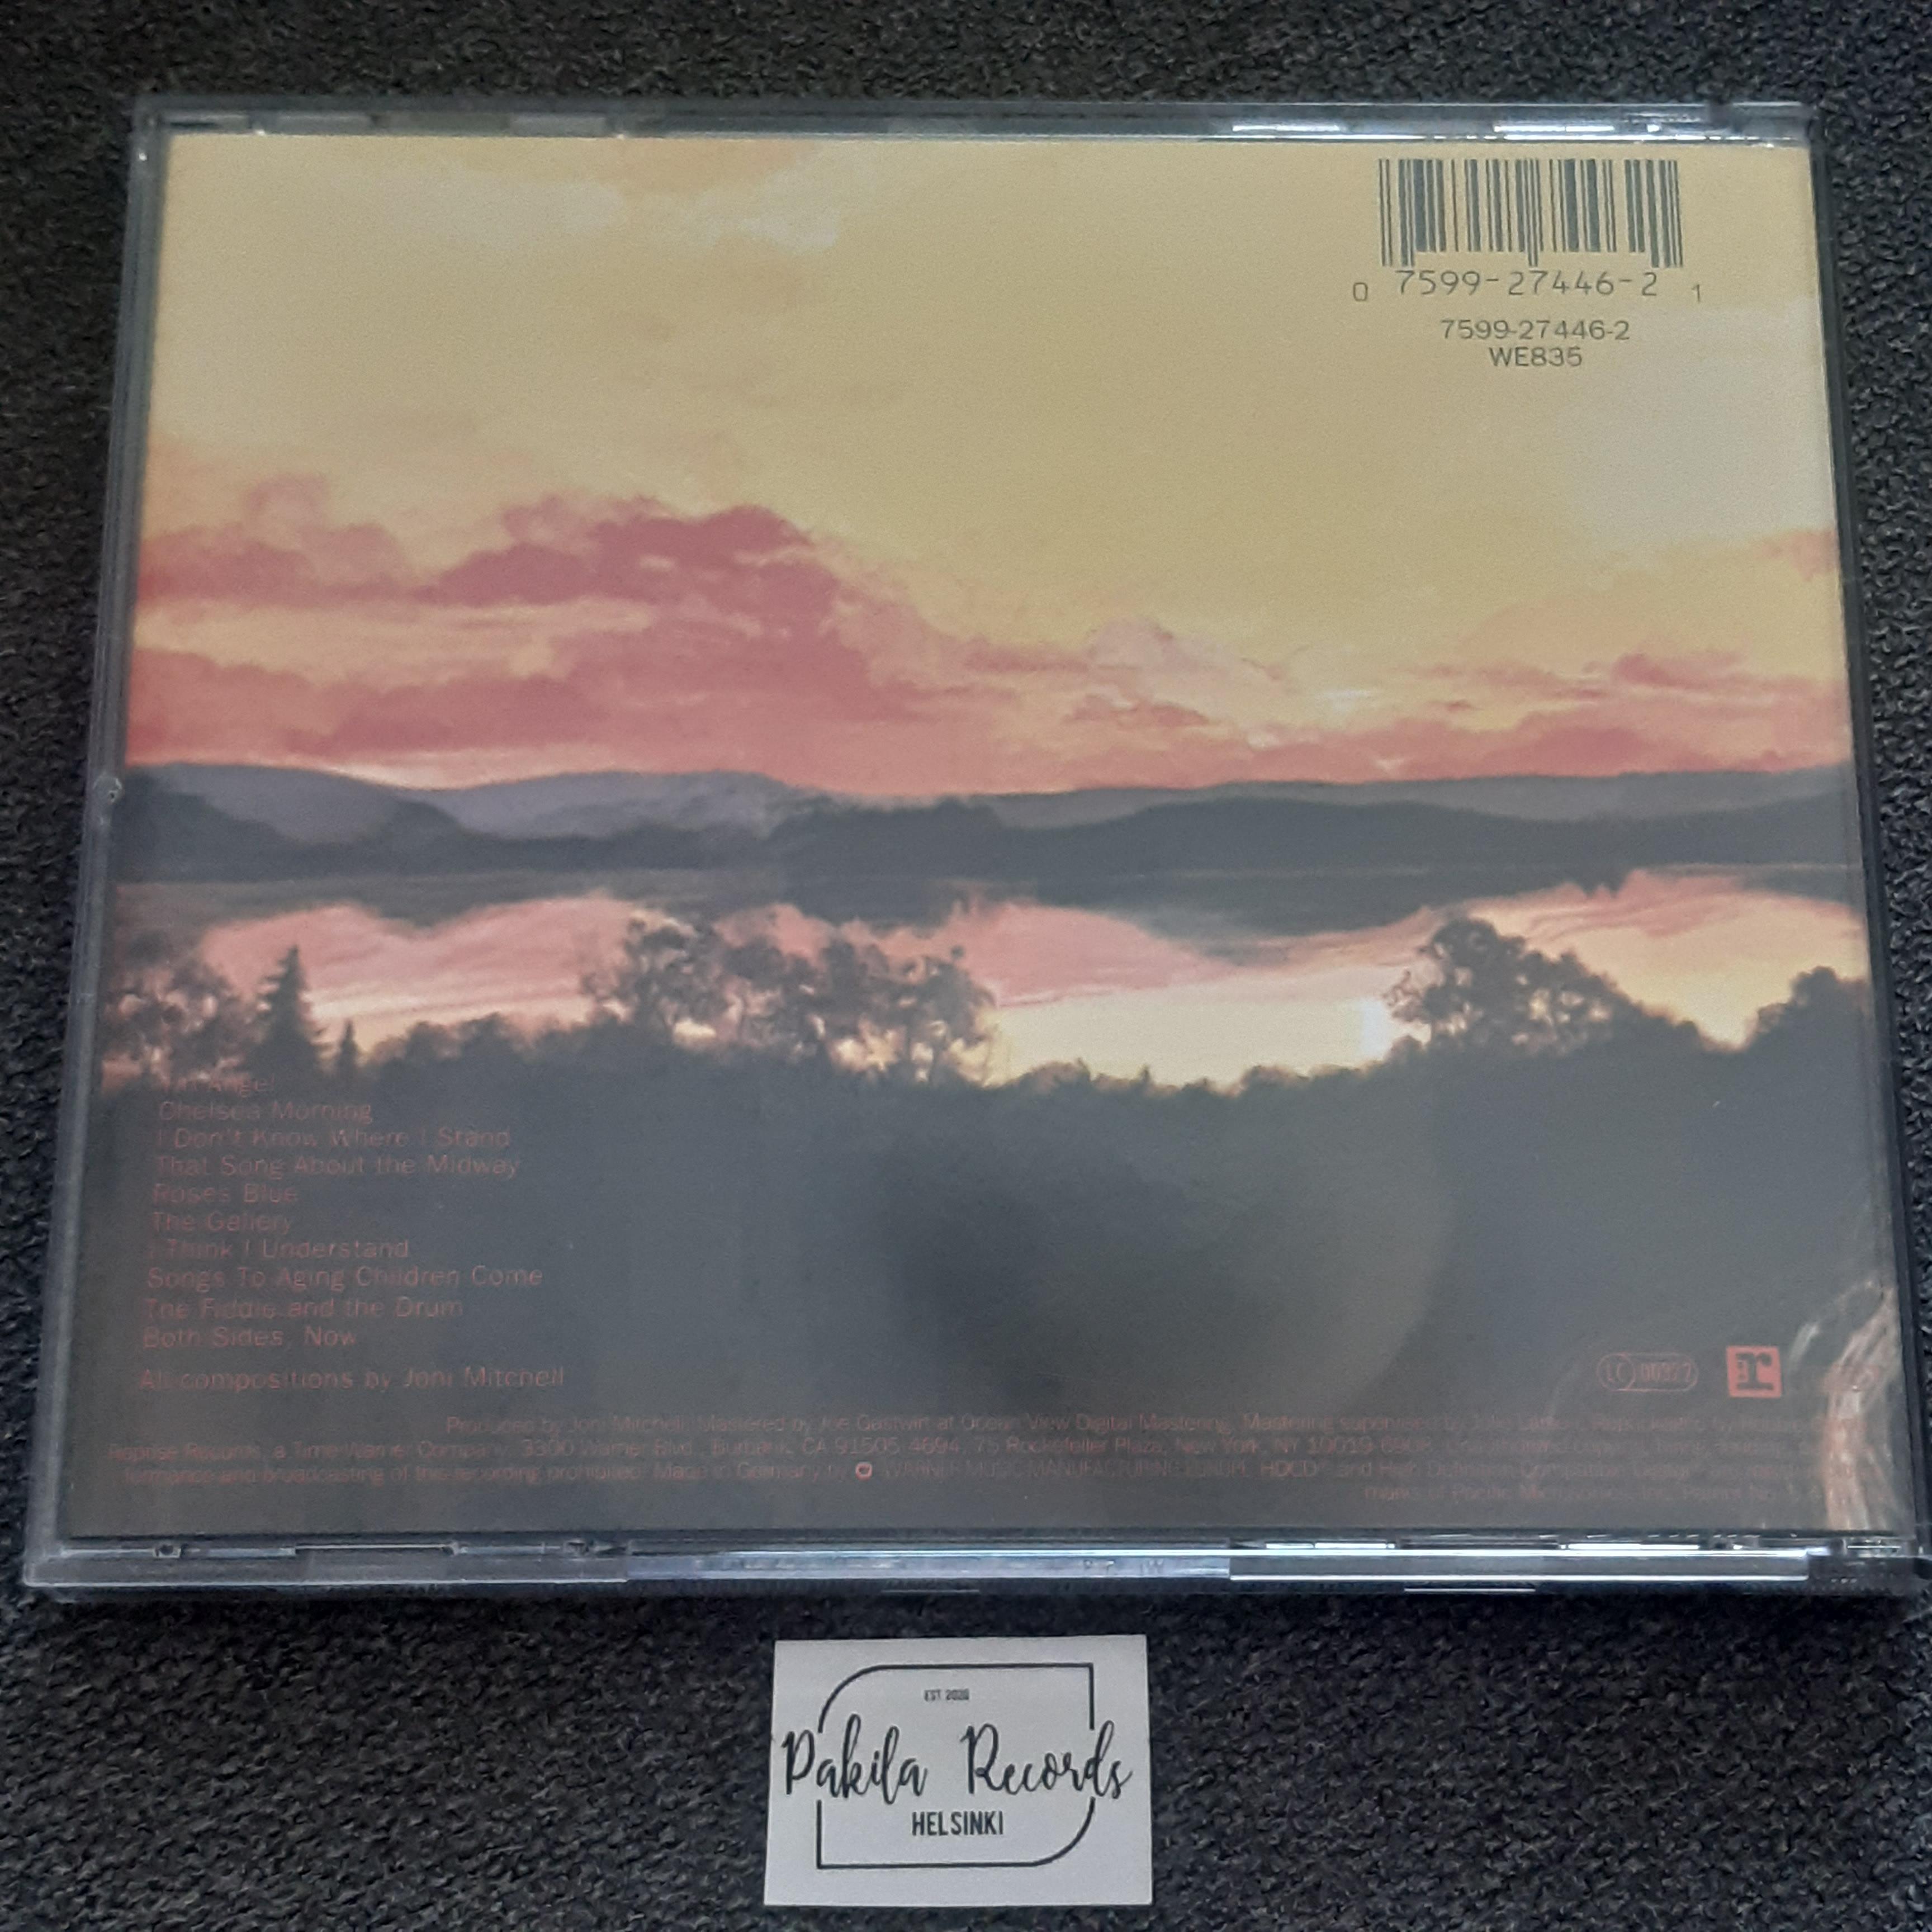 Joni Mitchell - Clouds - CD (käytetty)